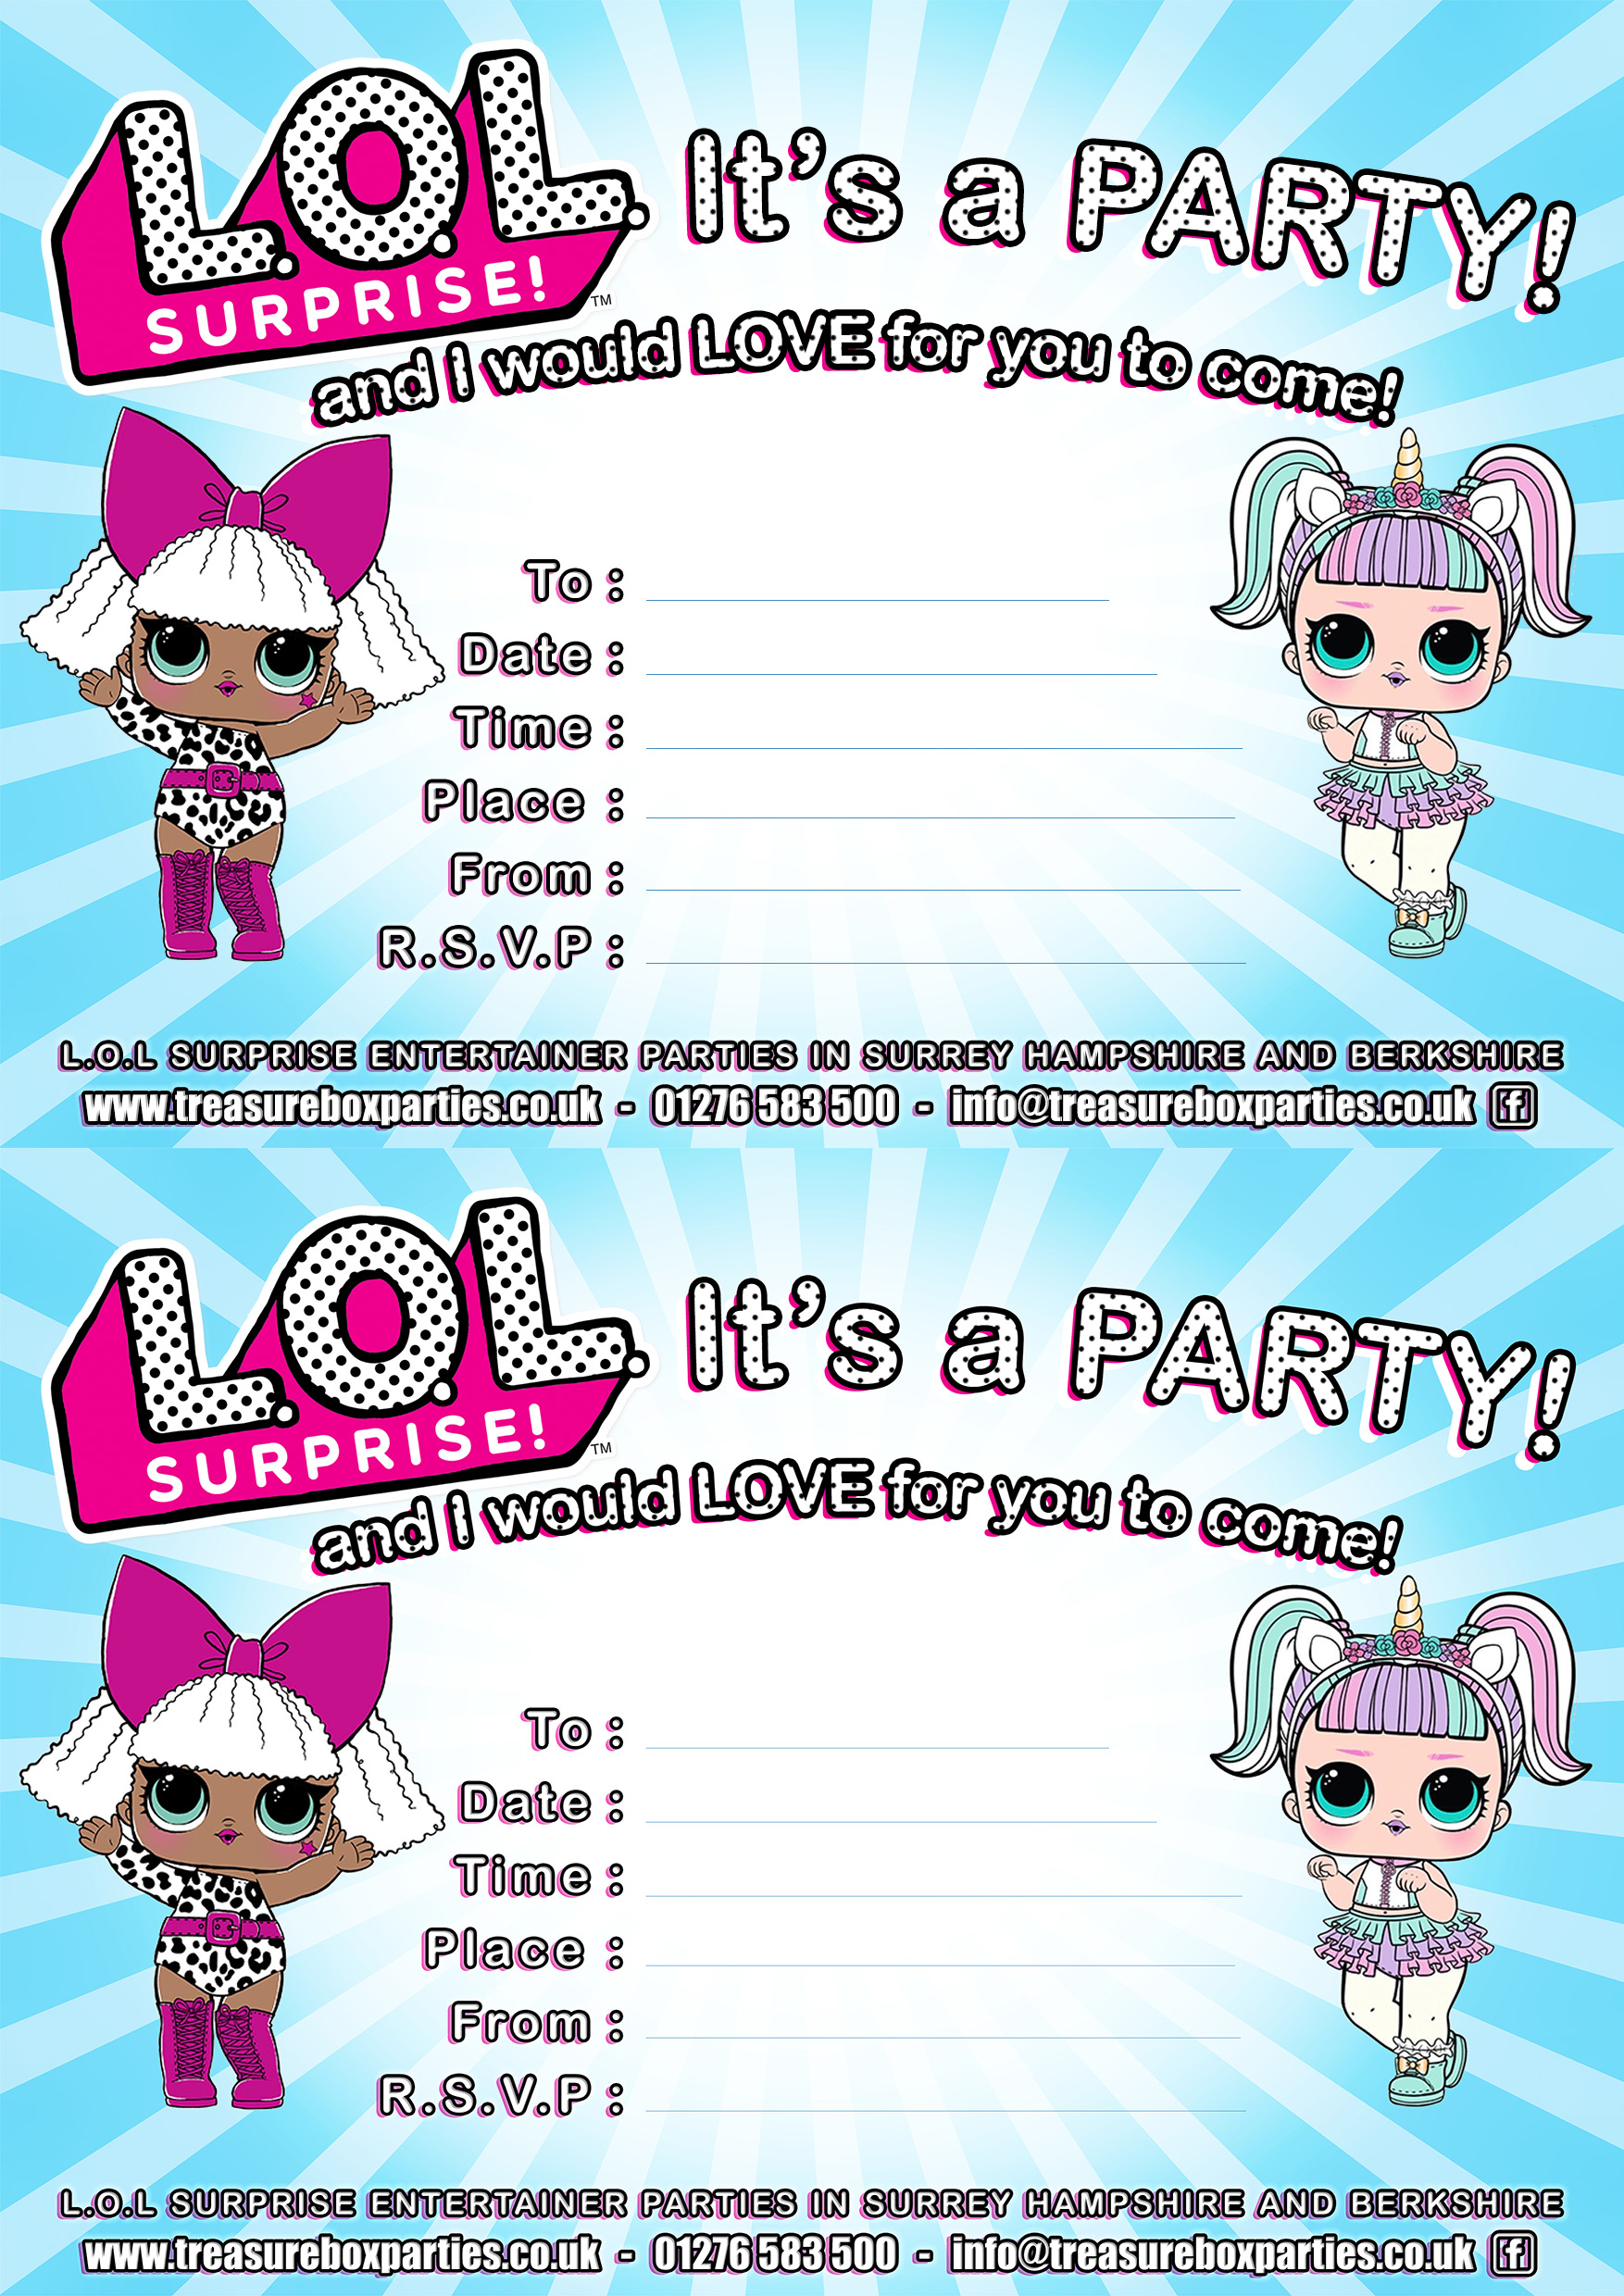 Lol Party Downloads Childrens Entertainer Parties Surrey Berkshire Hampshire Treasure Box Parties Supplies Kids Party Games Ideas